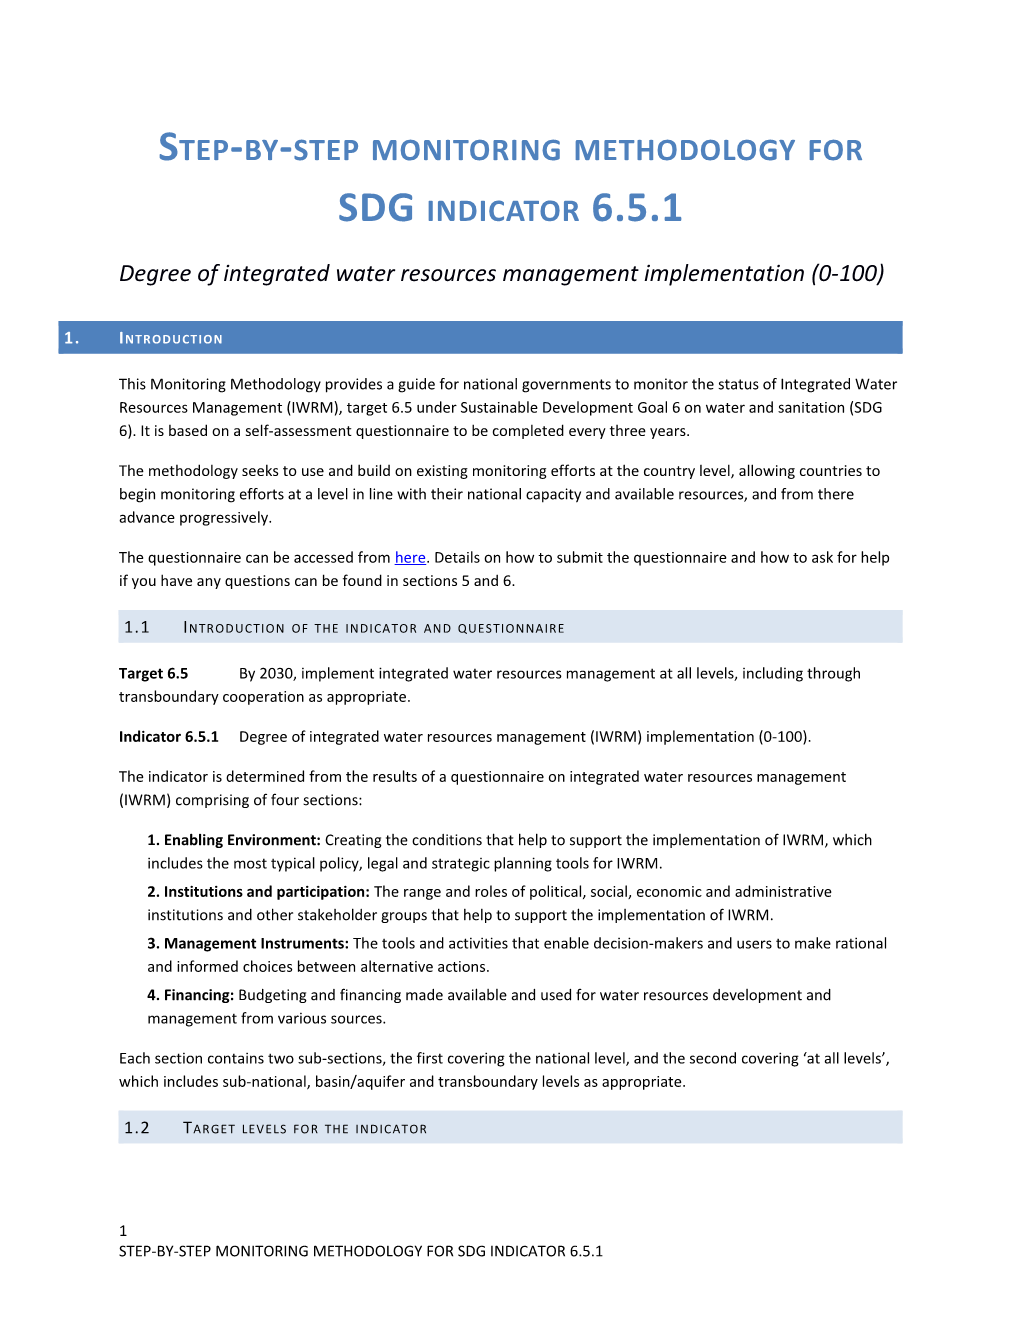 Step-By-Step Monitoring Methodology for SDG Indicator 6.5.1